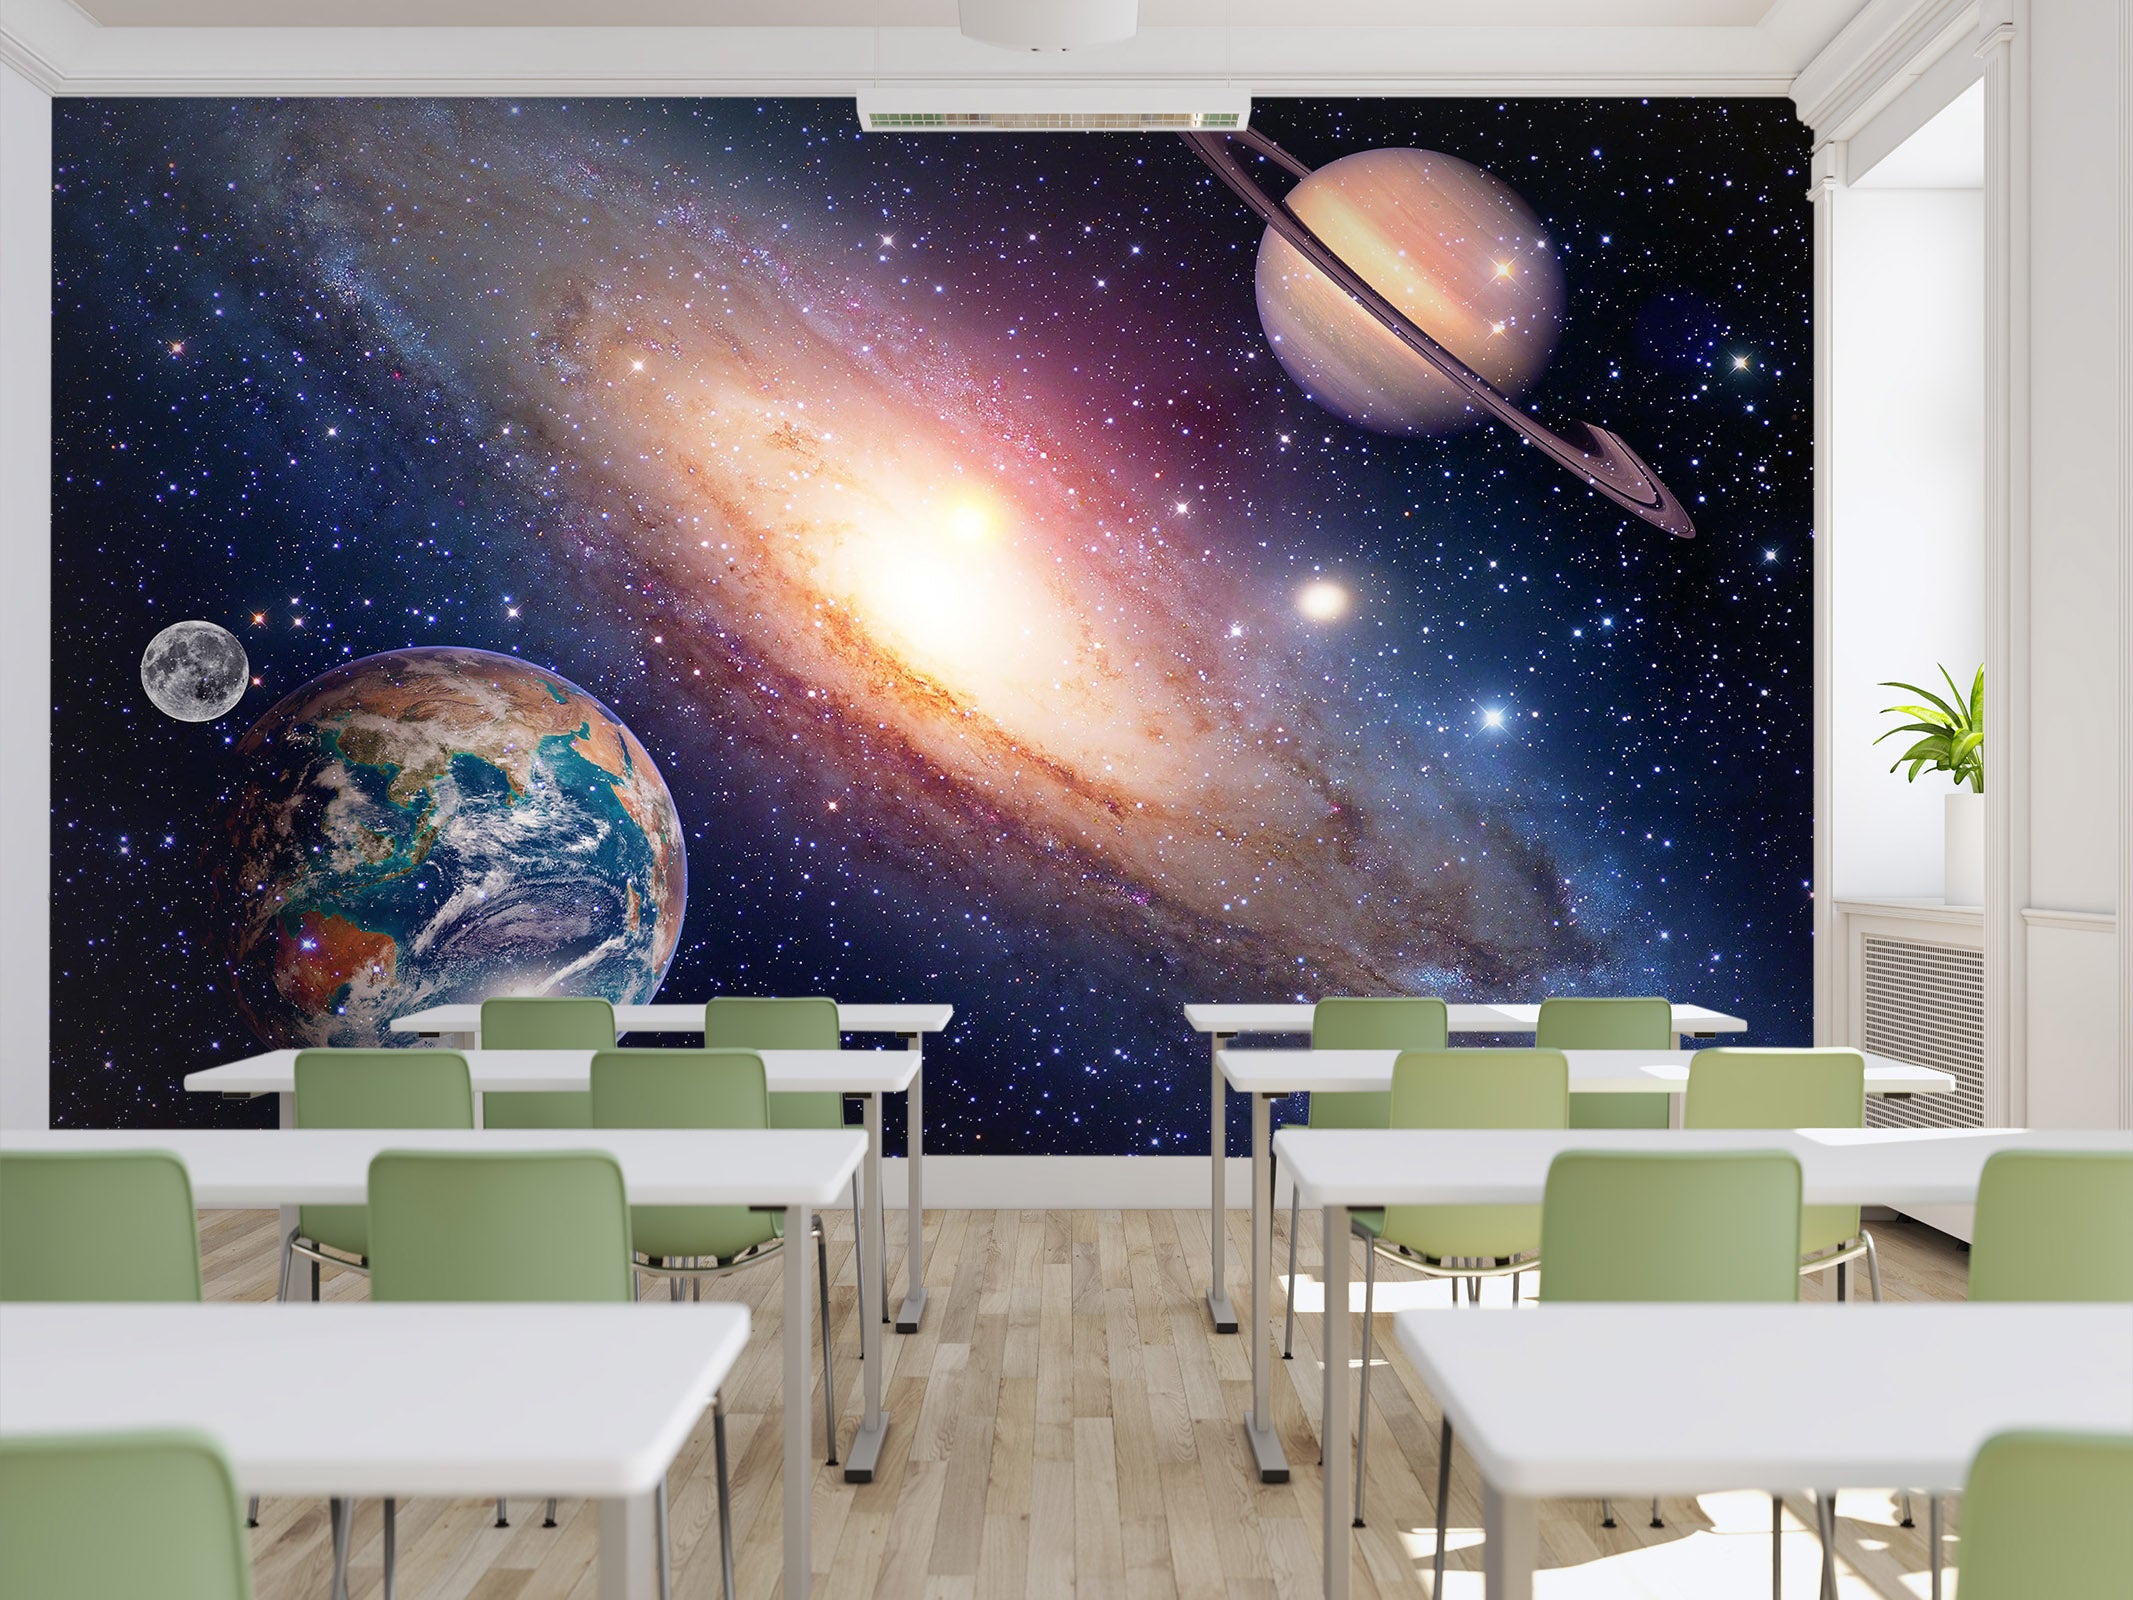 3D Cosmic Starry Sky 007 Wall Murals